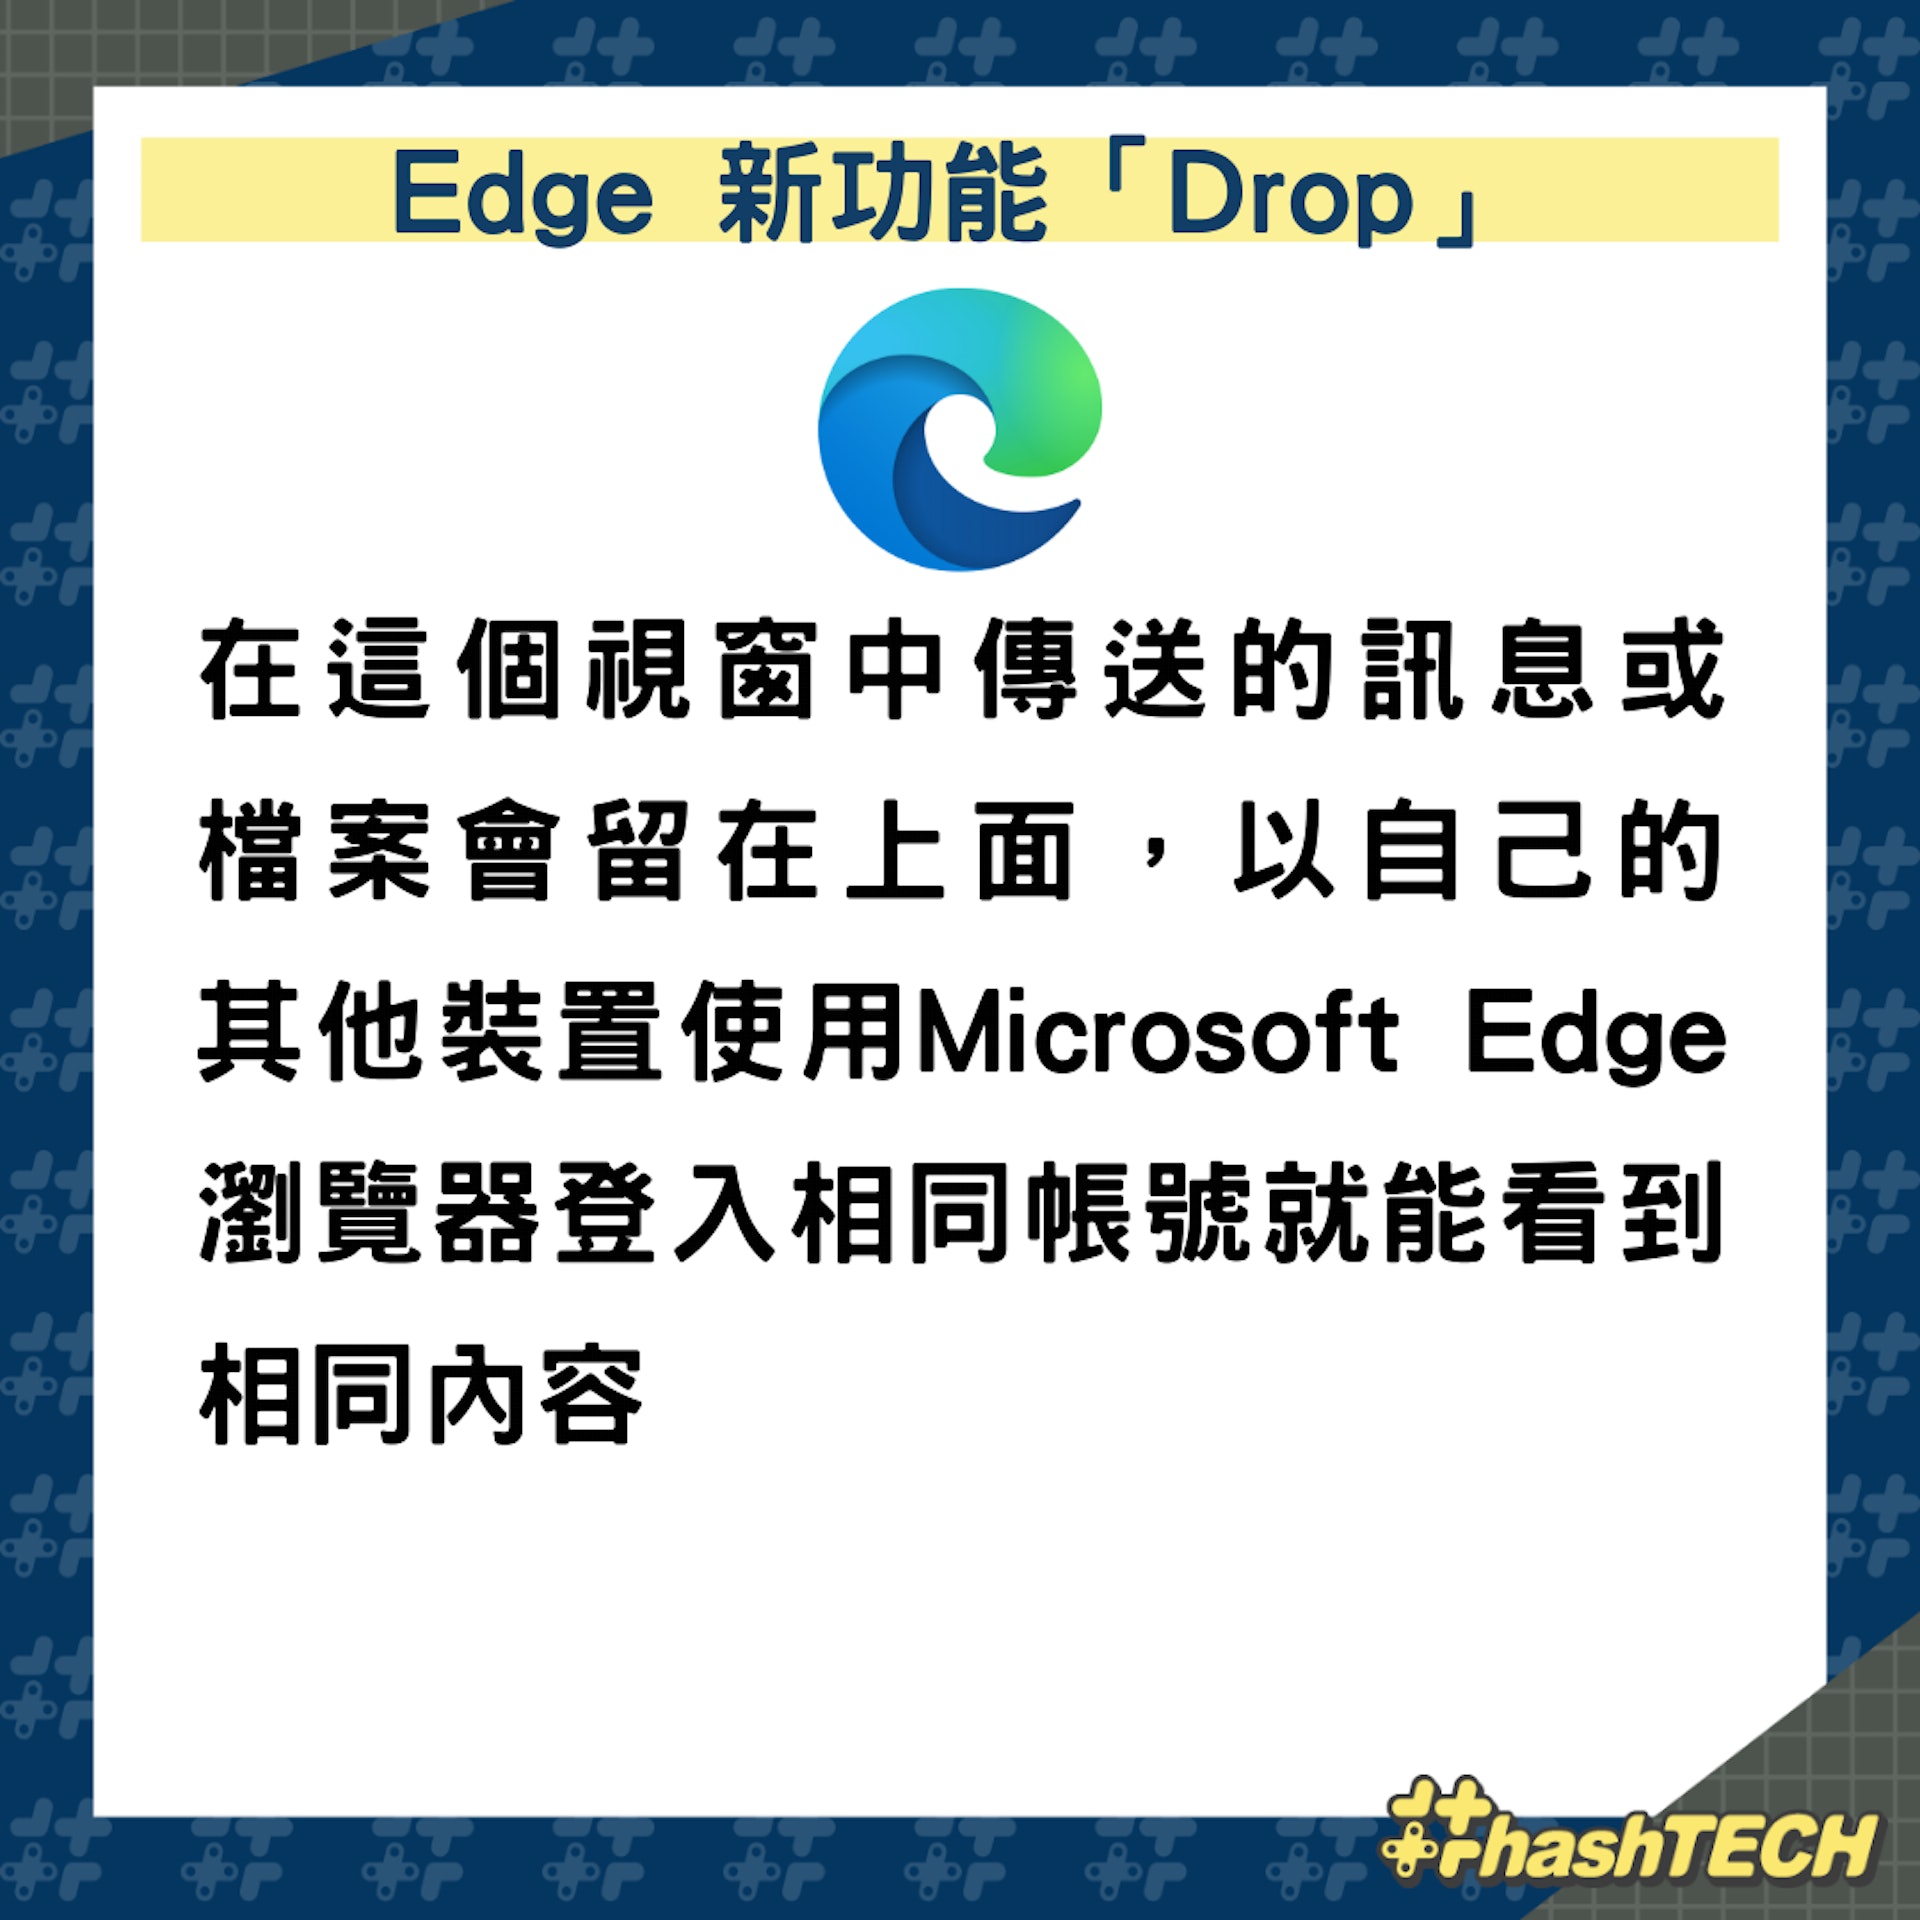 Microsoft Edge 瀏覽器新功能「Drop」（01製圖,Microsoft Edge）